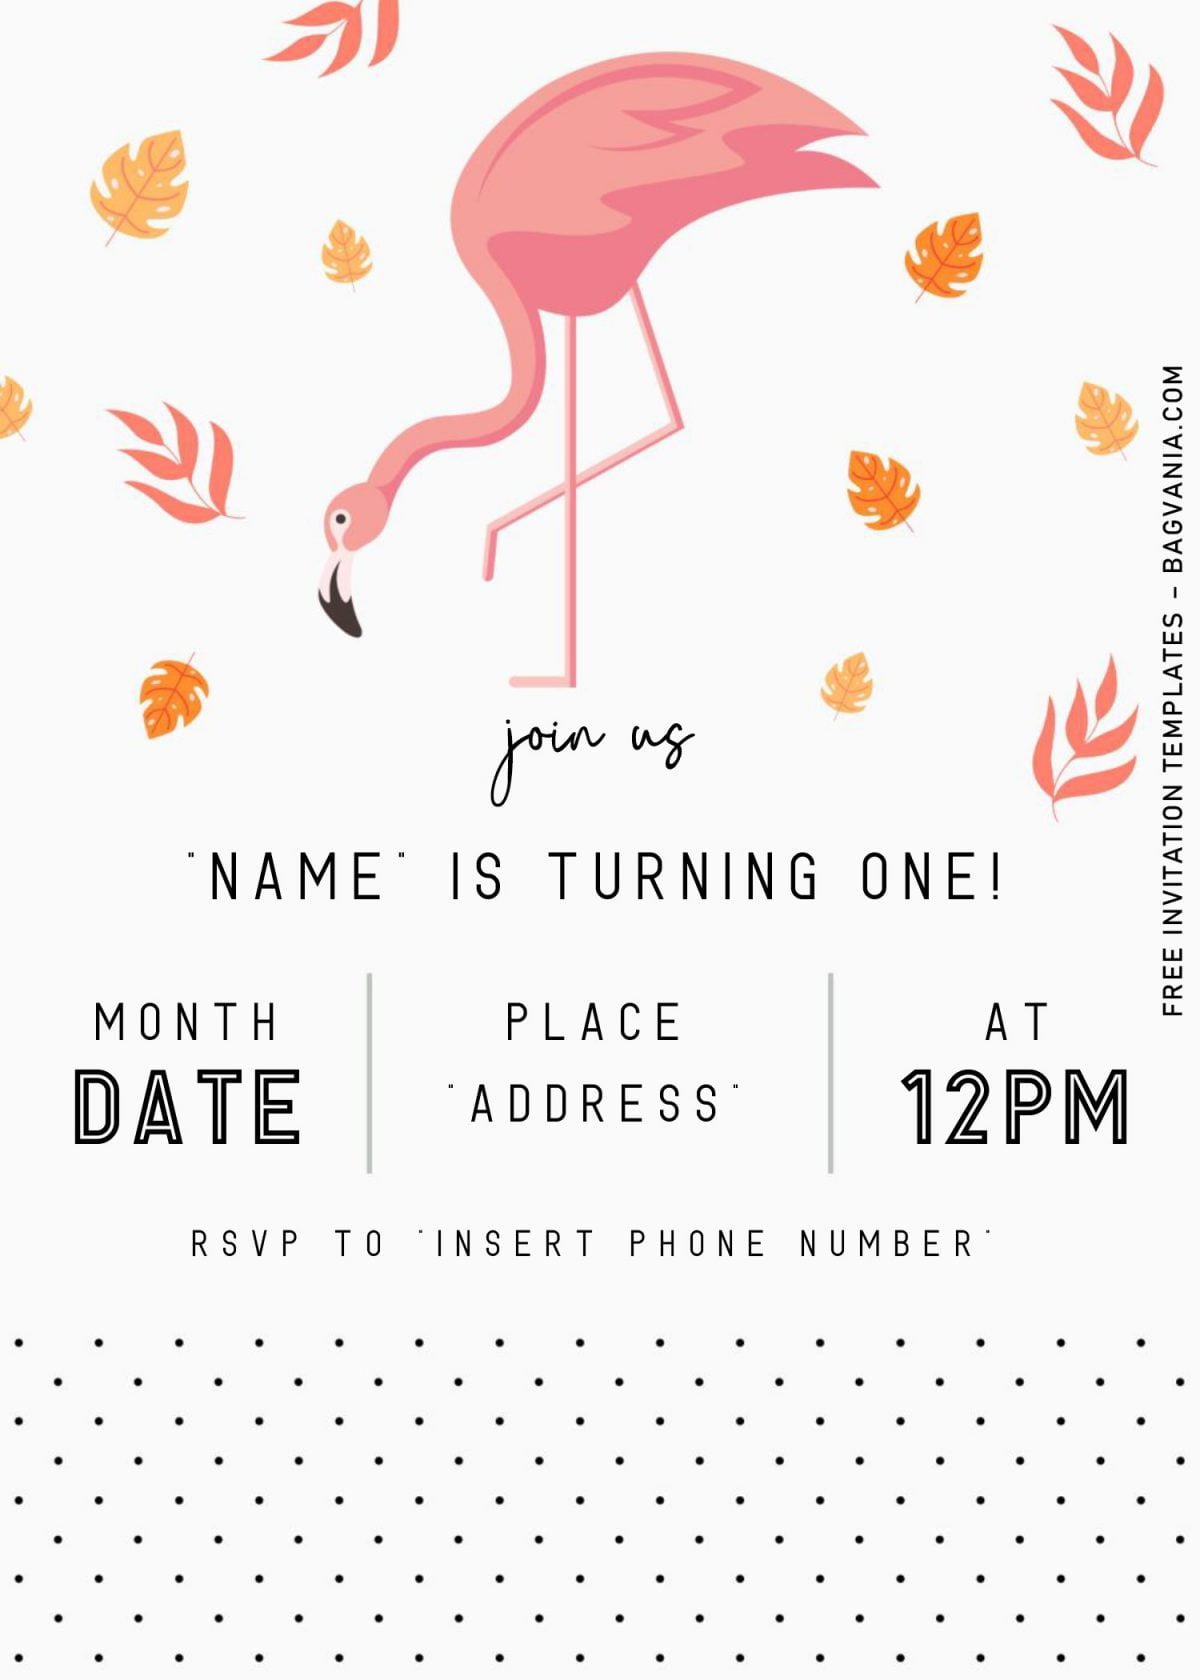 Flamingo Birthday Invitation Templates - Editable With Microsoft Word and has pink flamingo